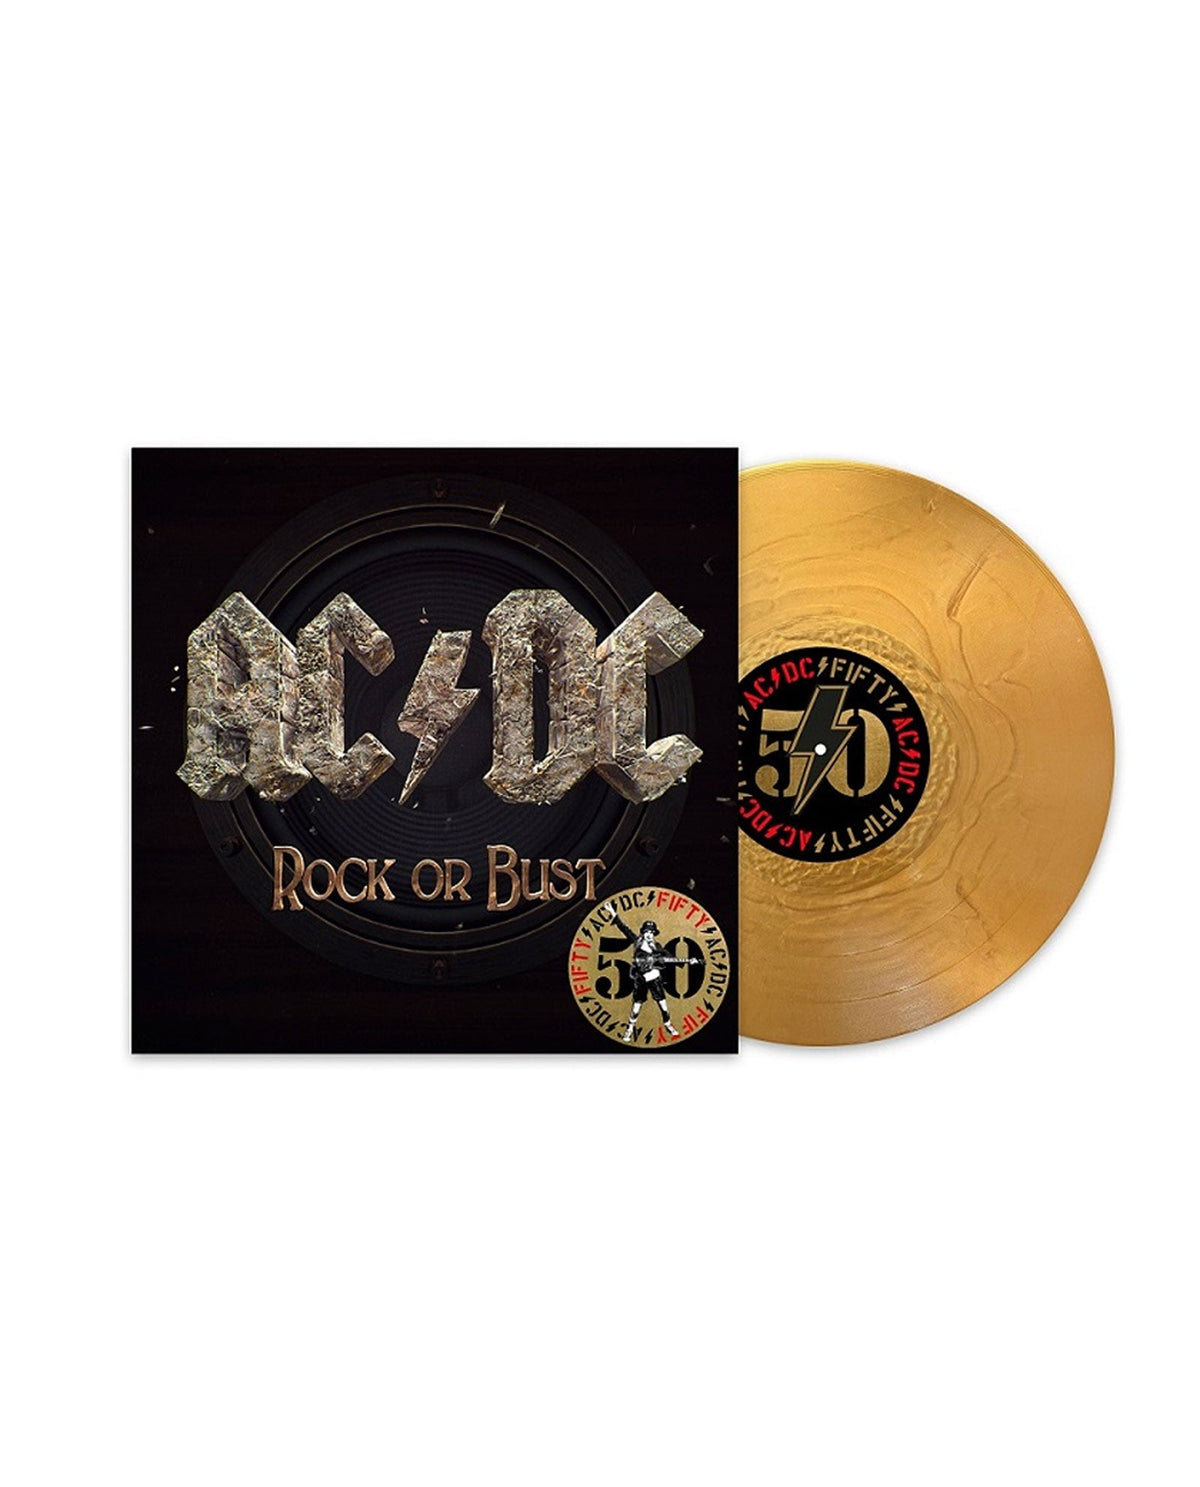 AC/DC - LP Vinilo Dorado "Rock or Bust" Ed. 50 aniversario - D2fy · Rocktud - Rocktud